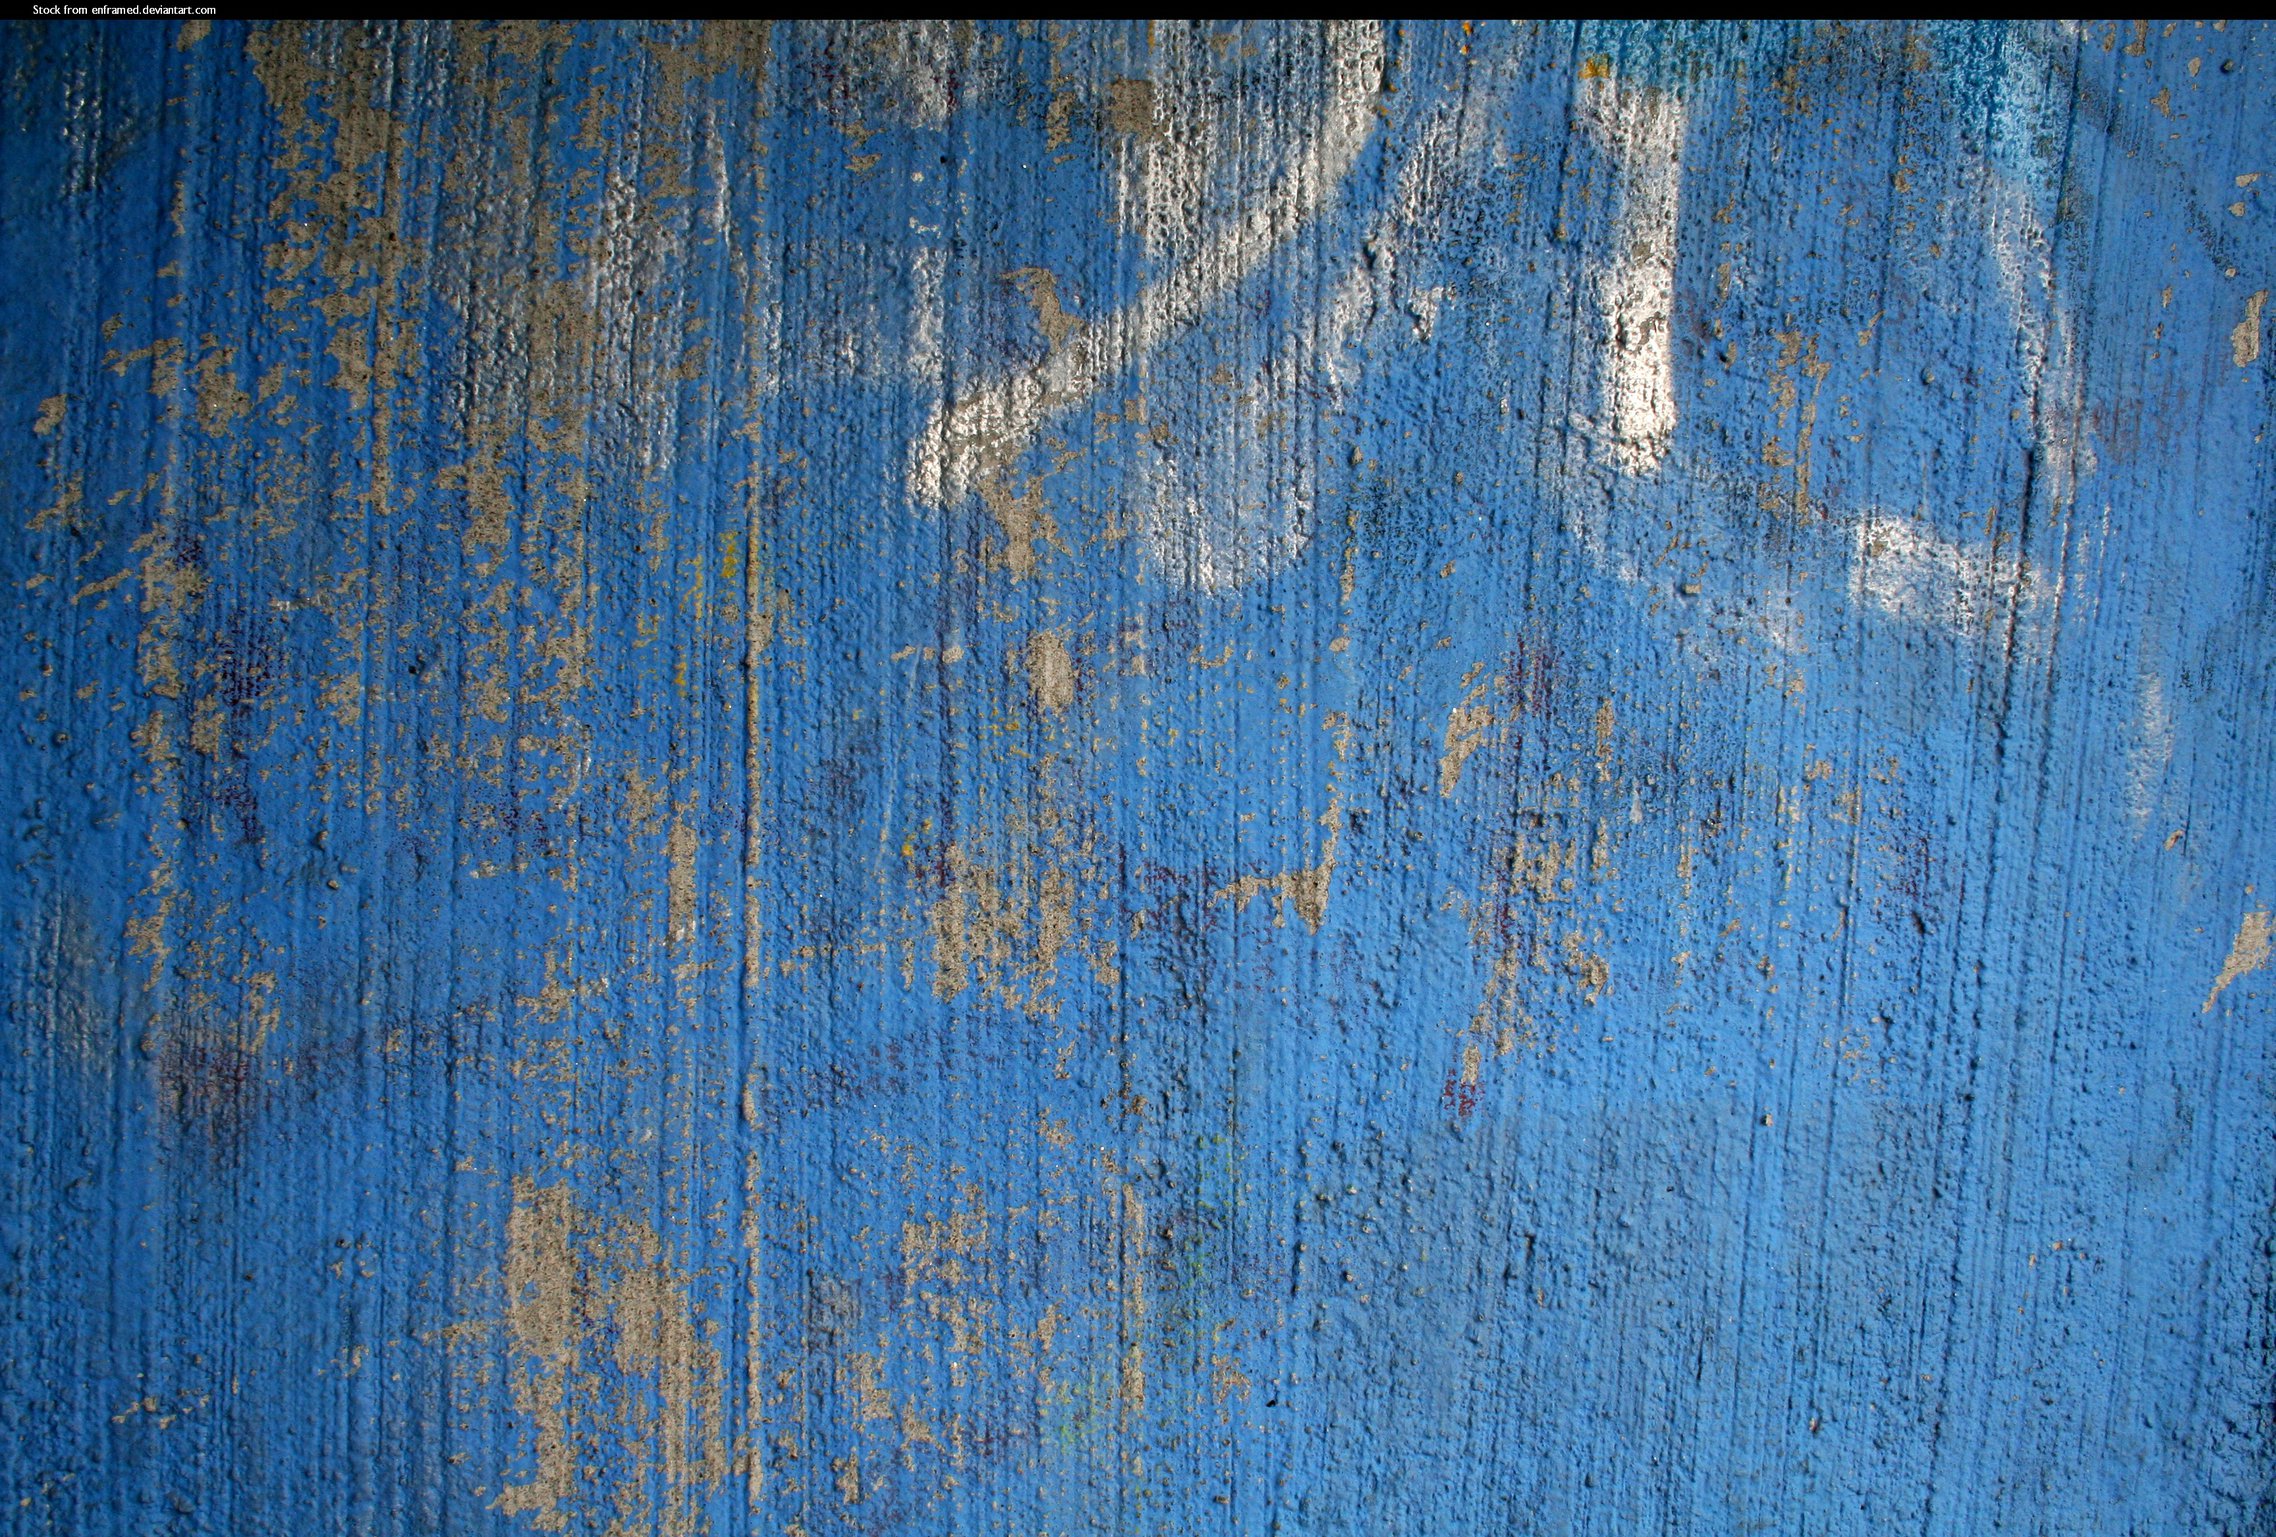 concrete texture blue by enframed on DeviantArt